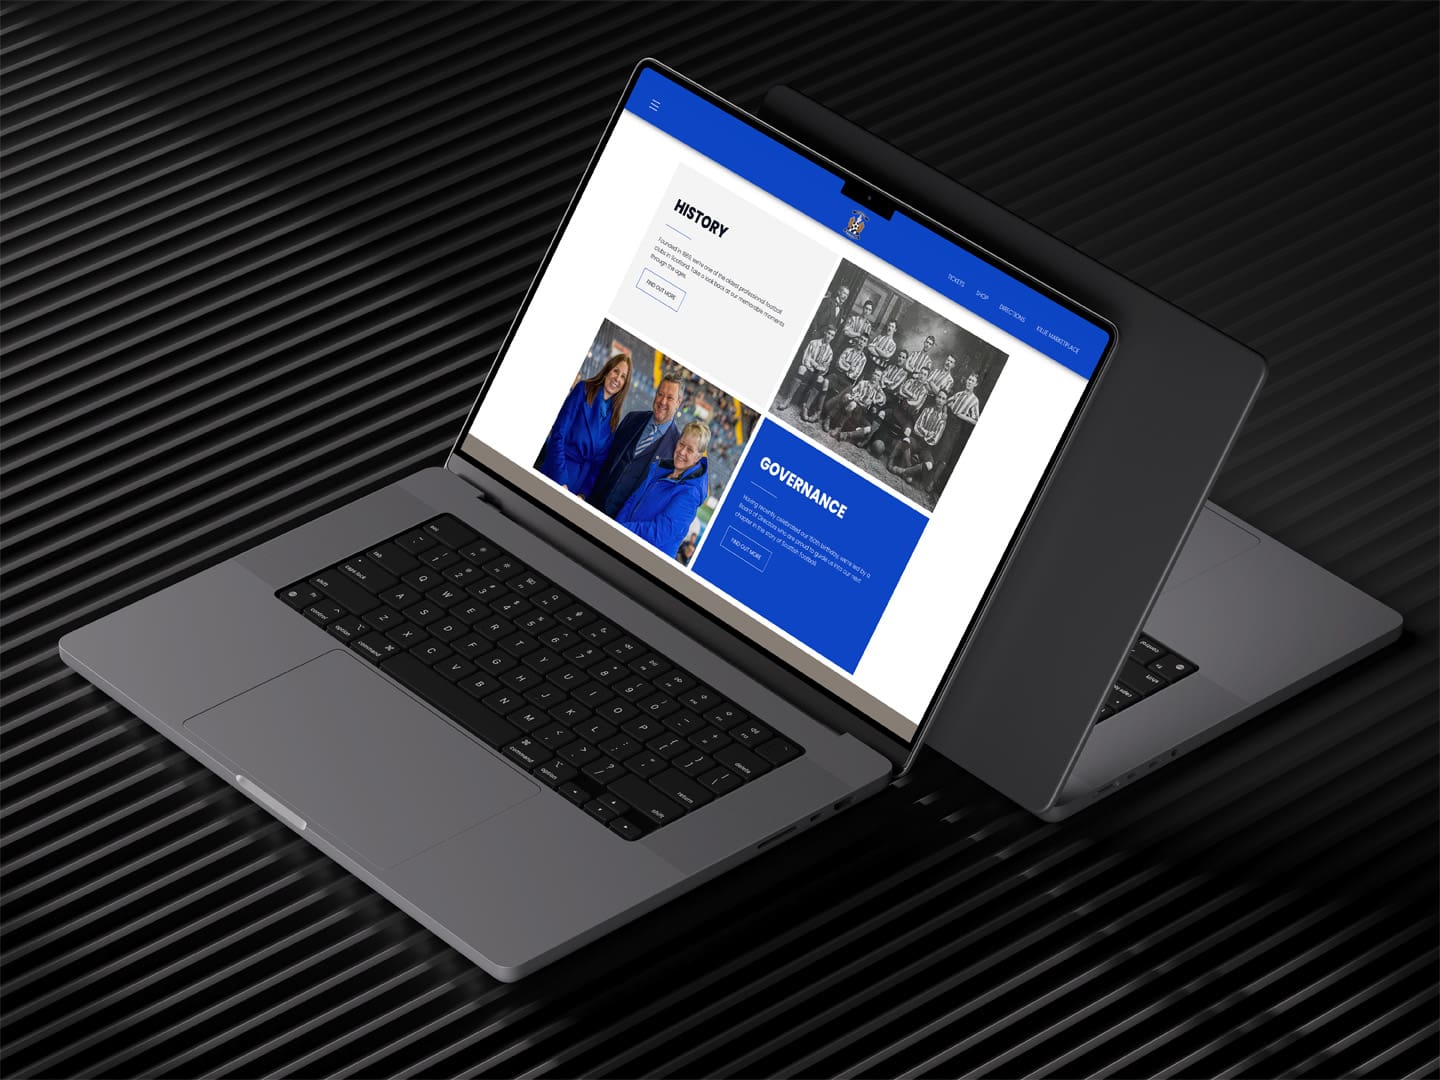 MacBook Pro laptop illustrating the Kilmarnock Football Club website